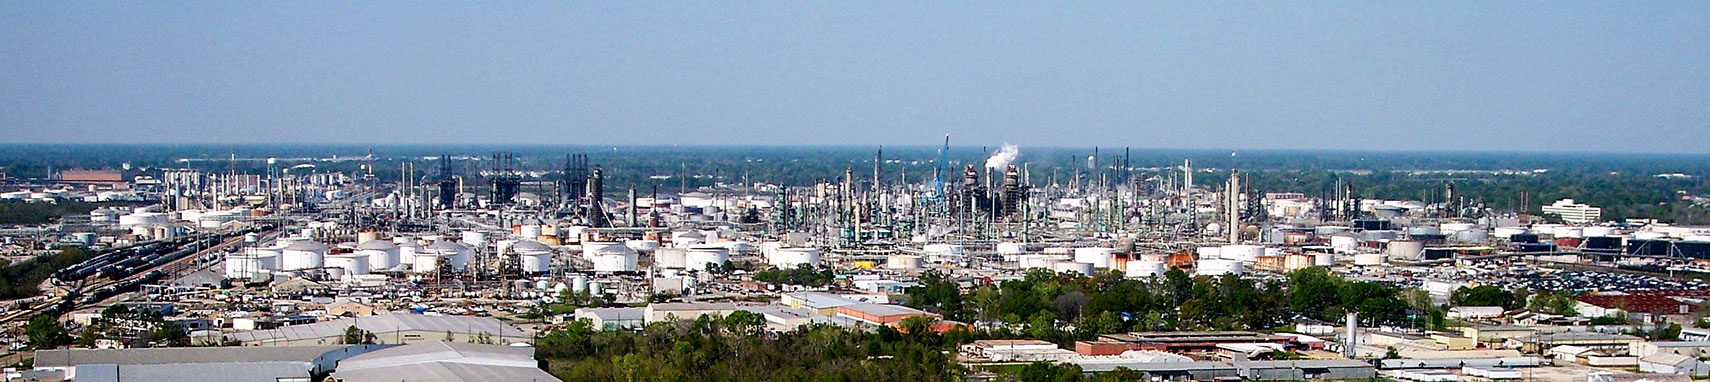 ExxonMobil oil refinery in Baton Rouge